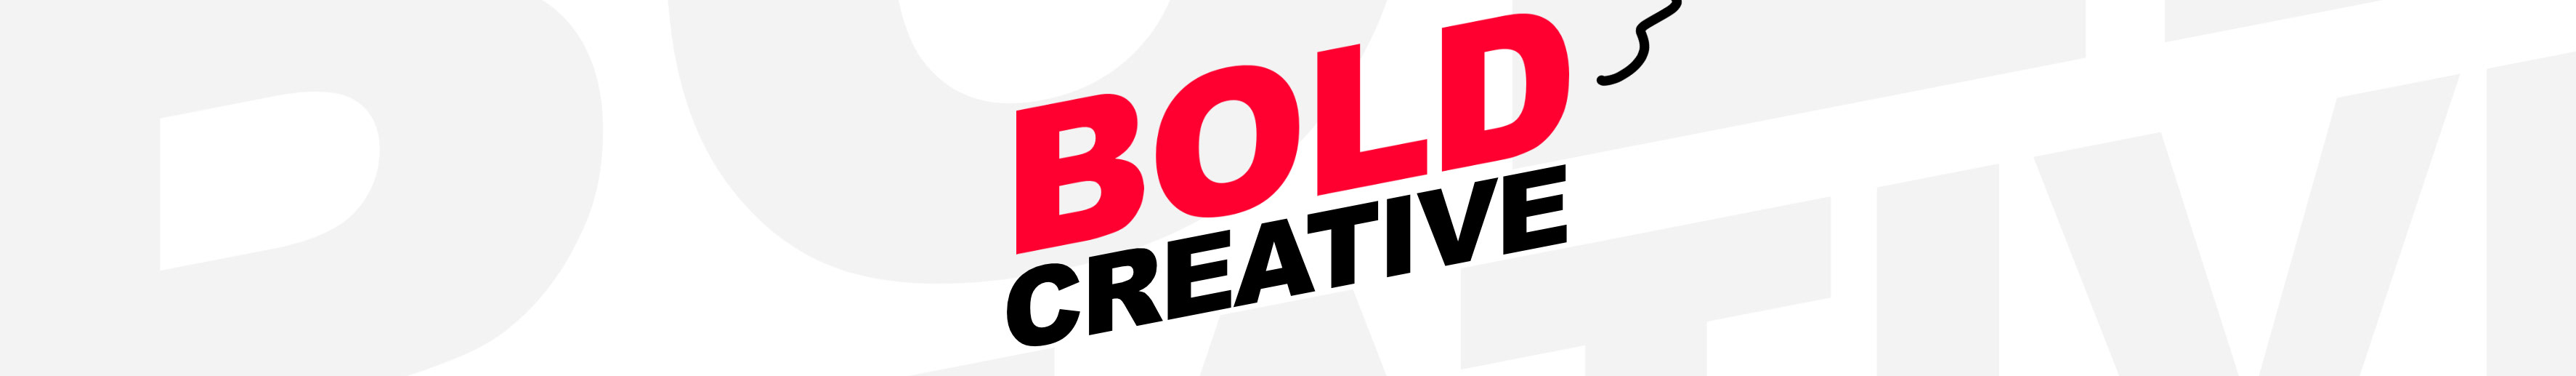 BOLD CREATIVE's profile banner